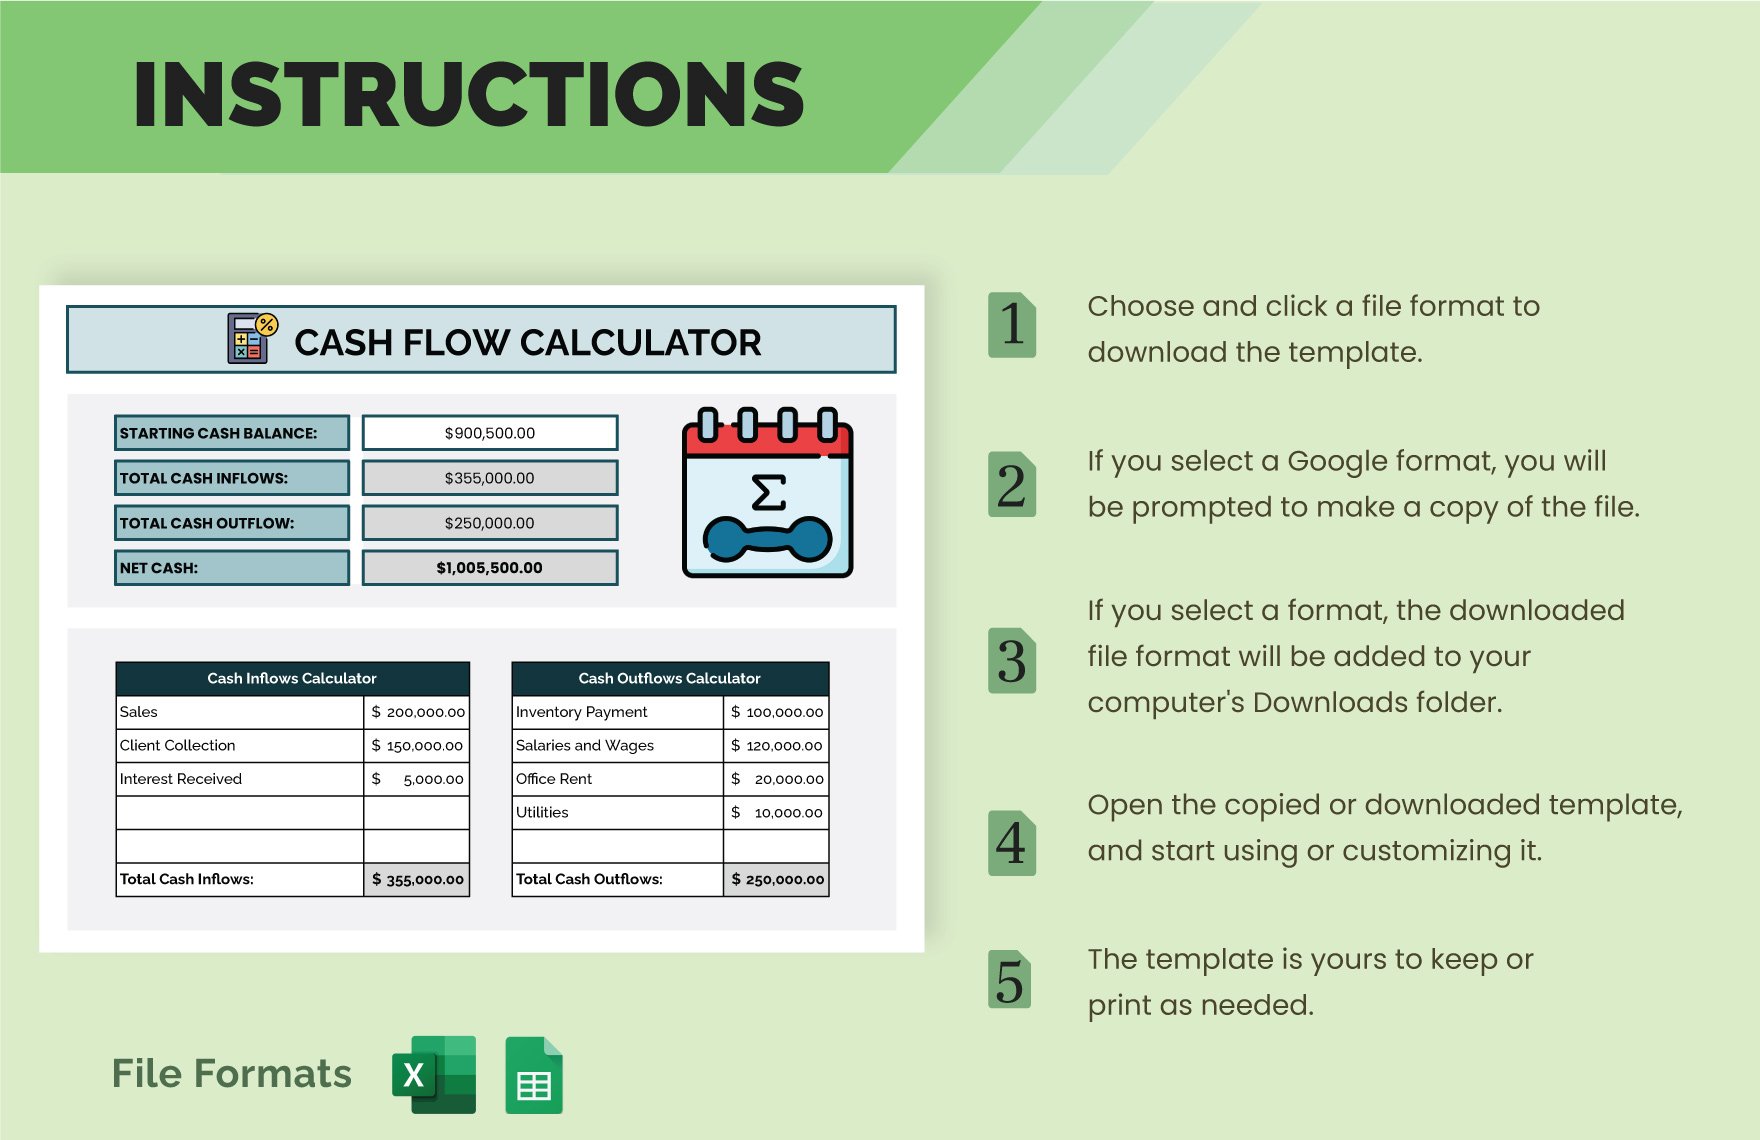 Cash Flow Calculator template